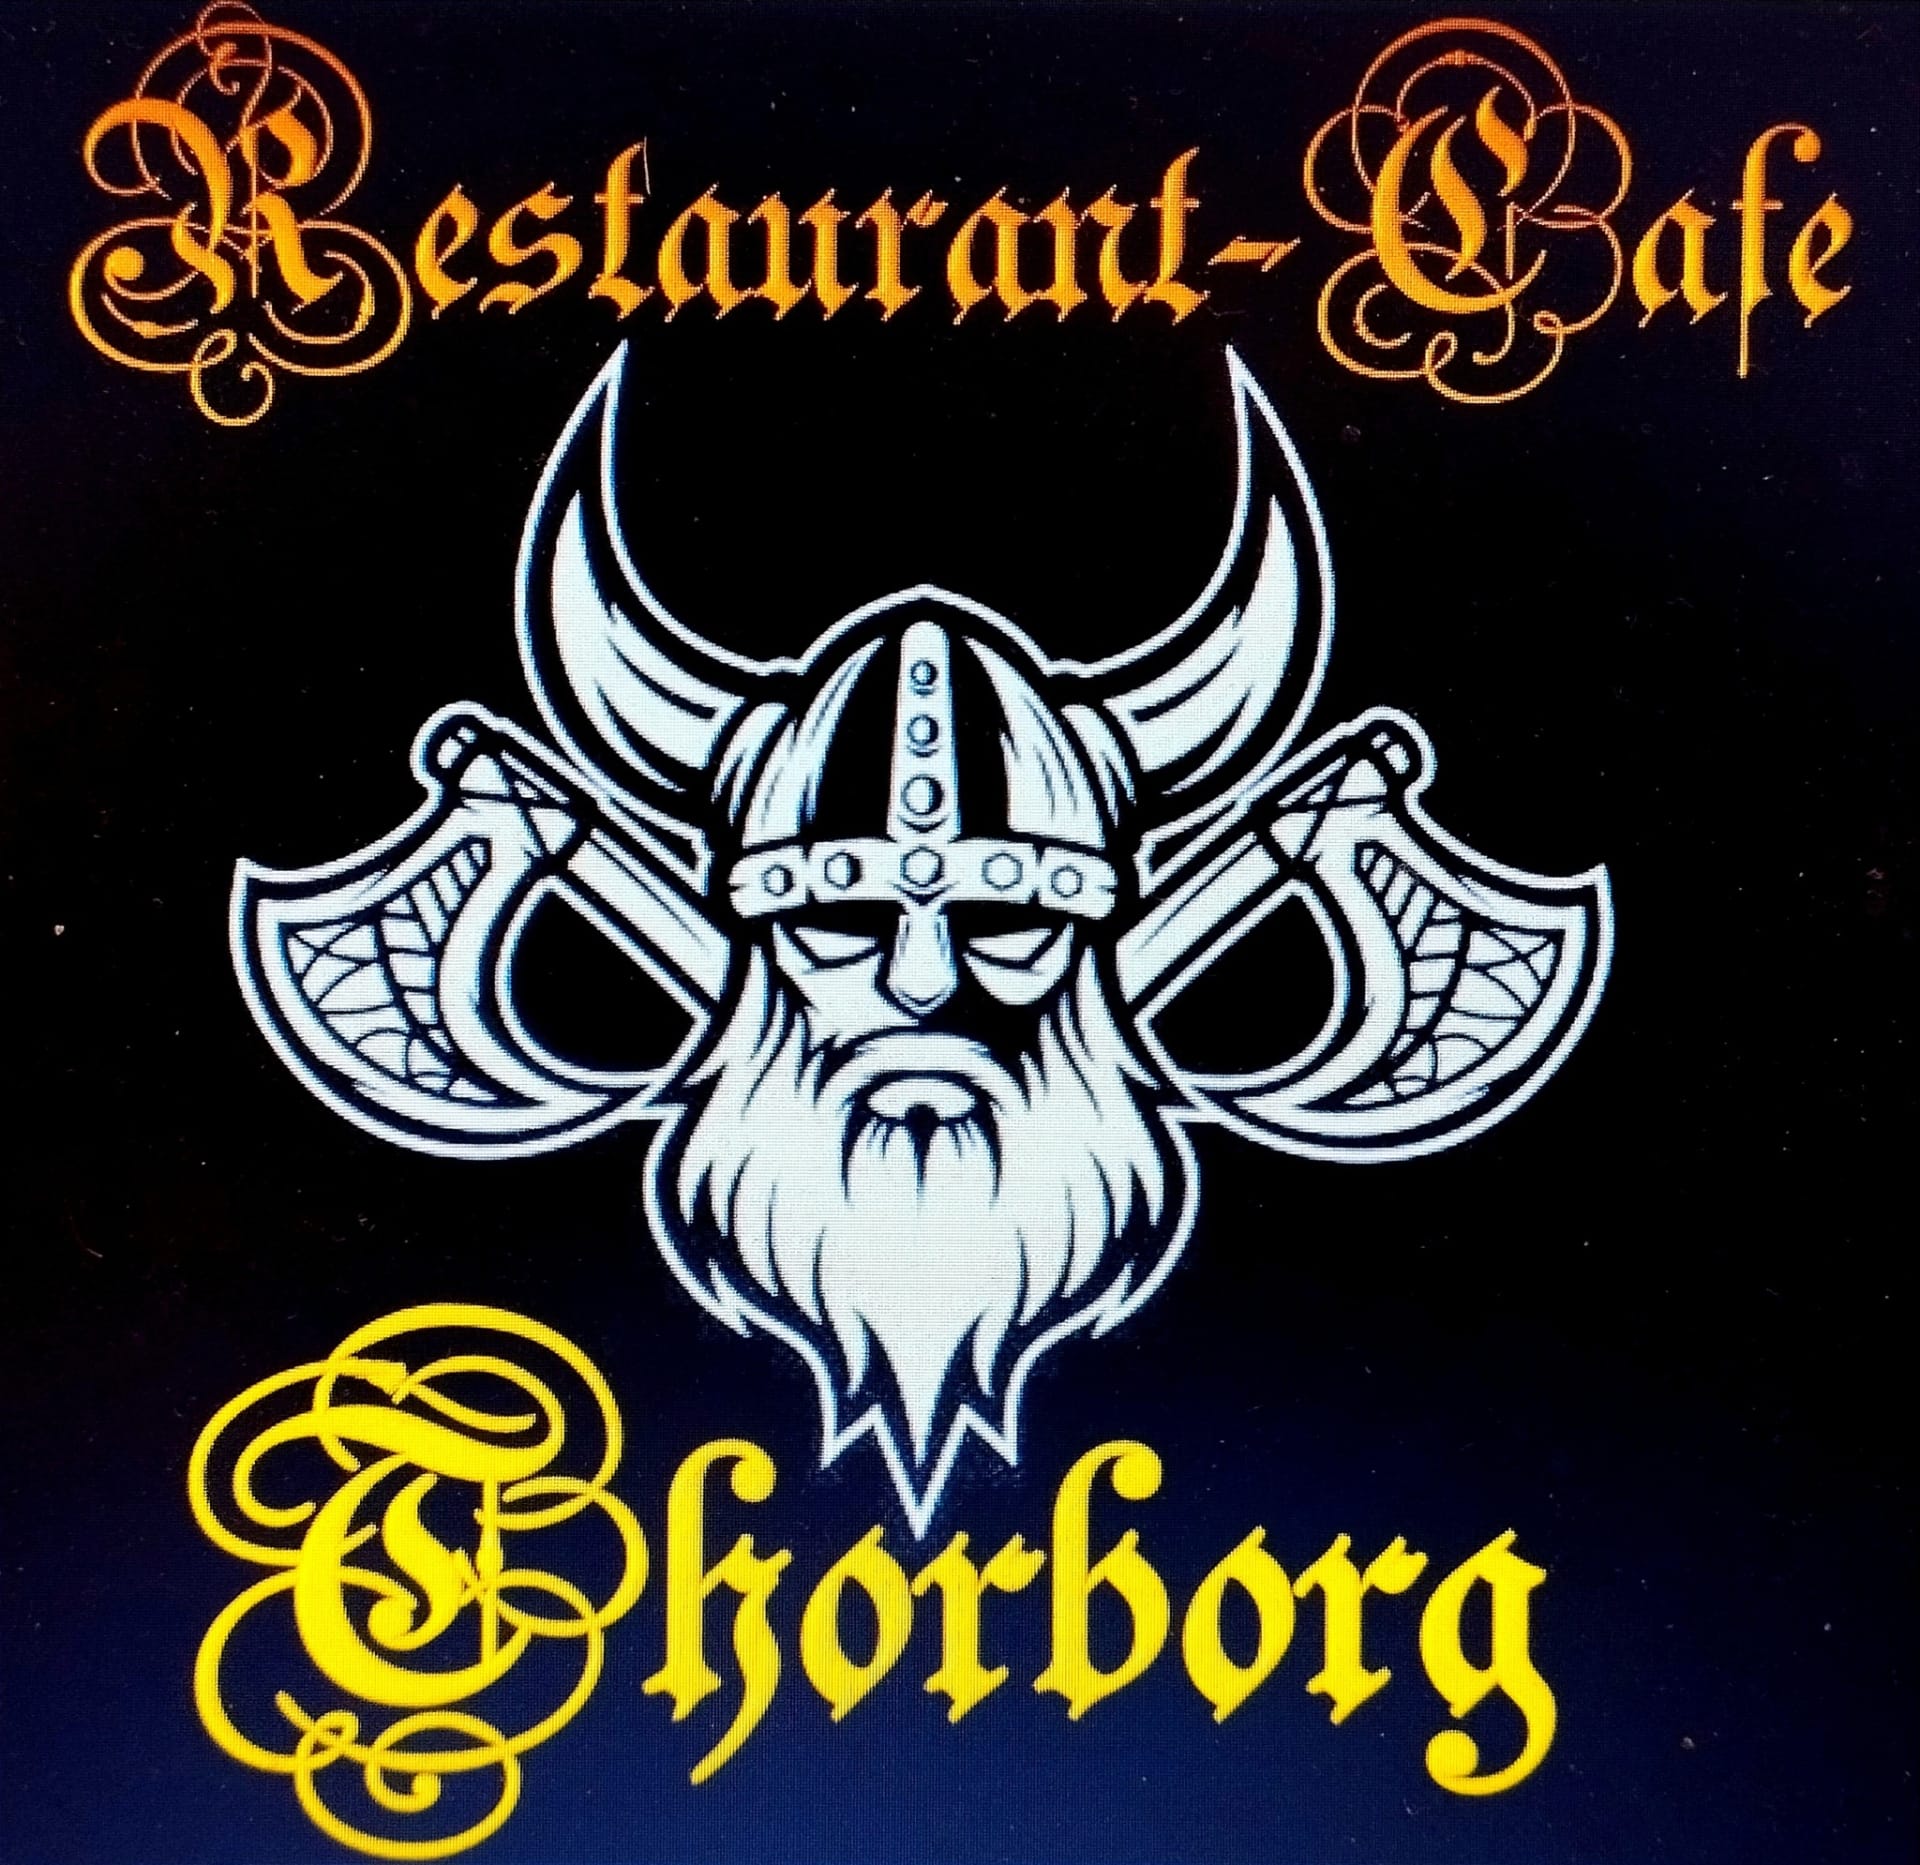 Restaurang-cafe Thorborg